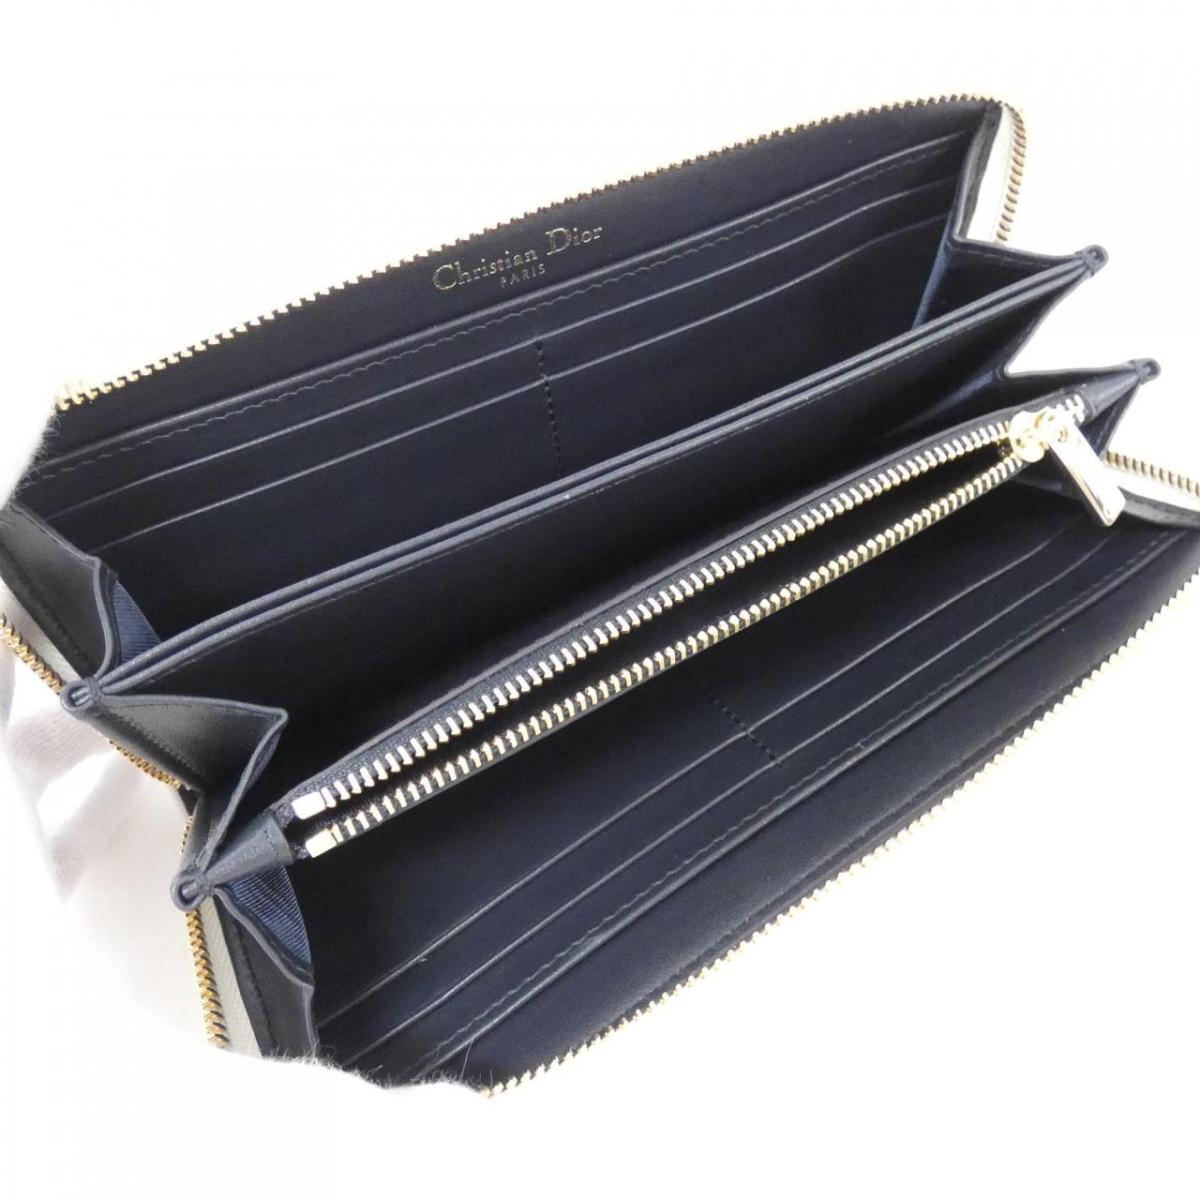 Christian Dior Wave Wallet S6203OSGQ Wallet